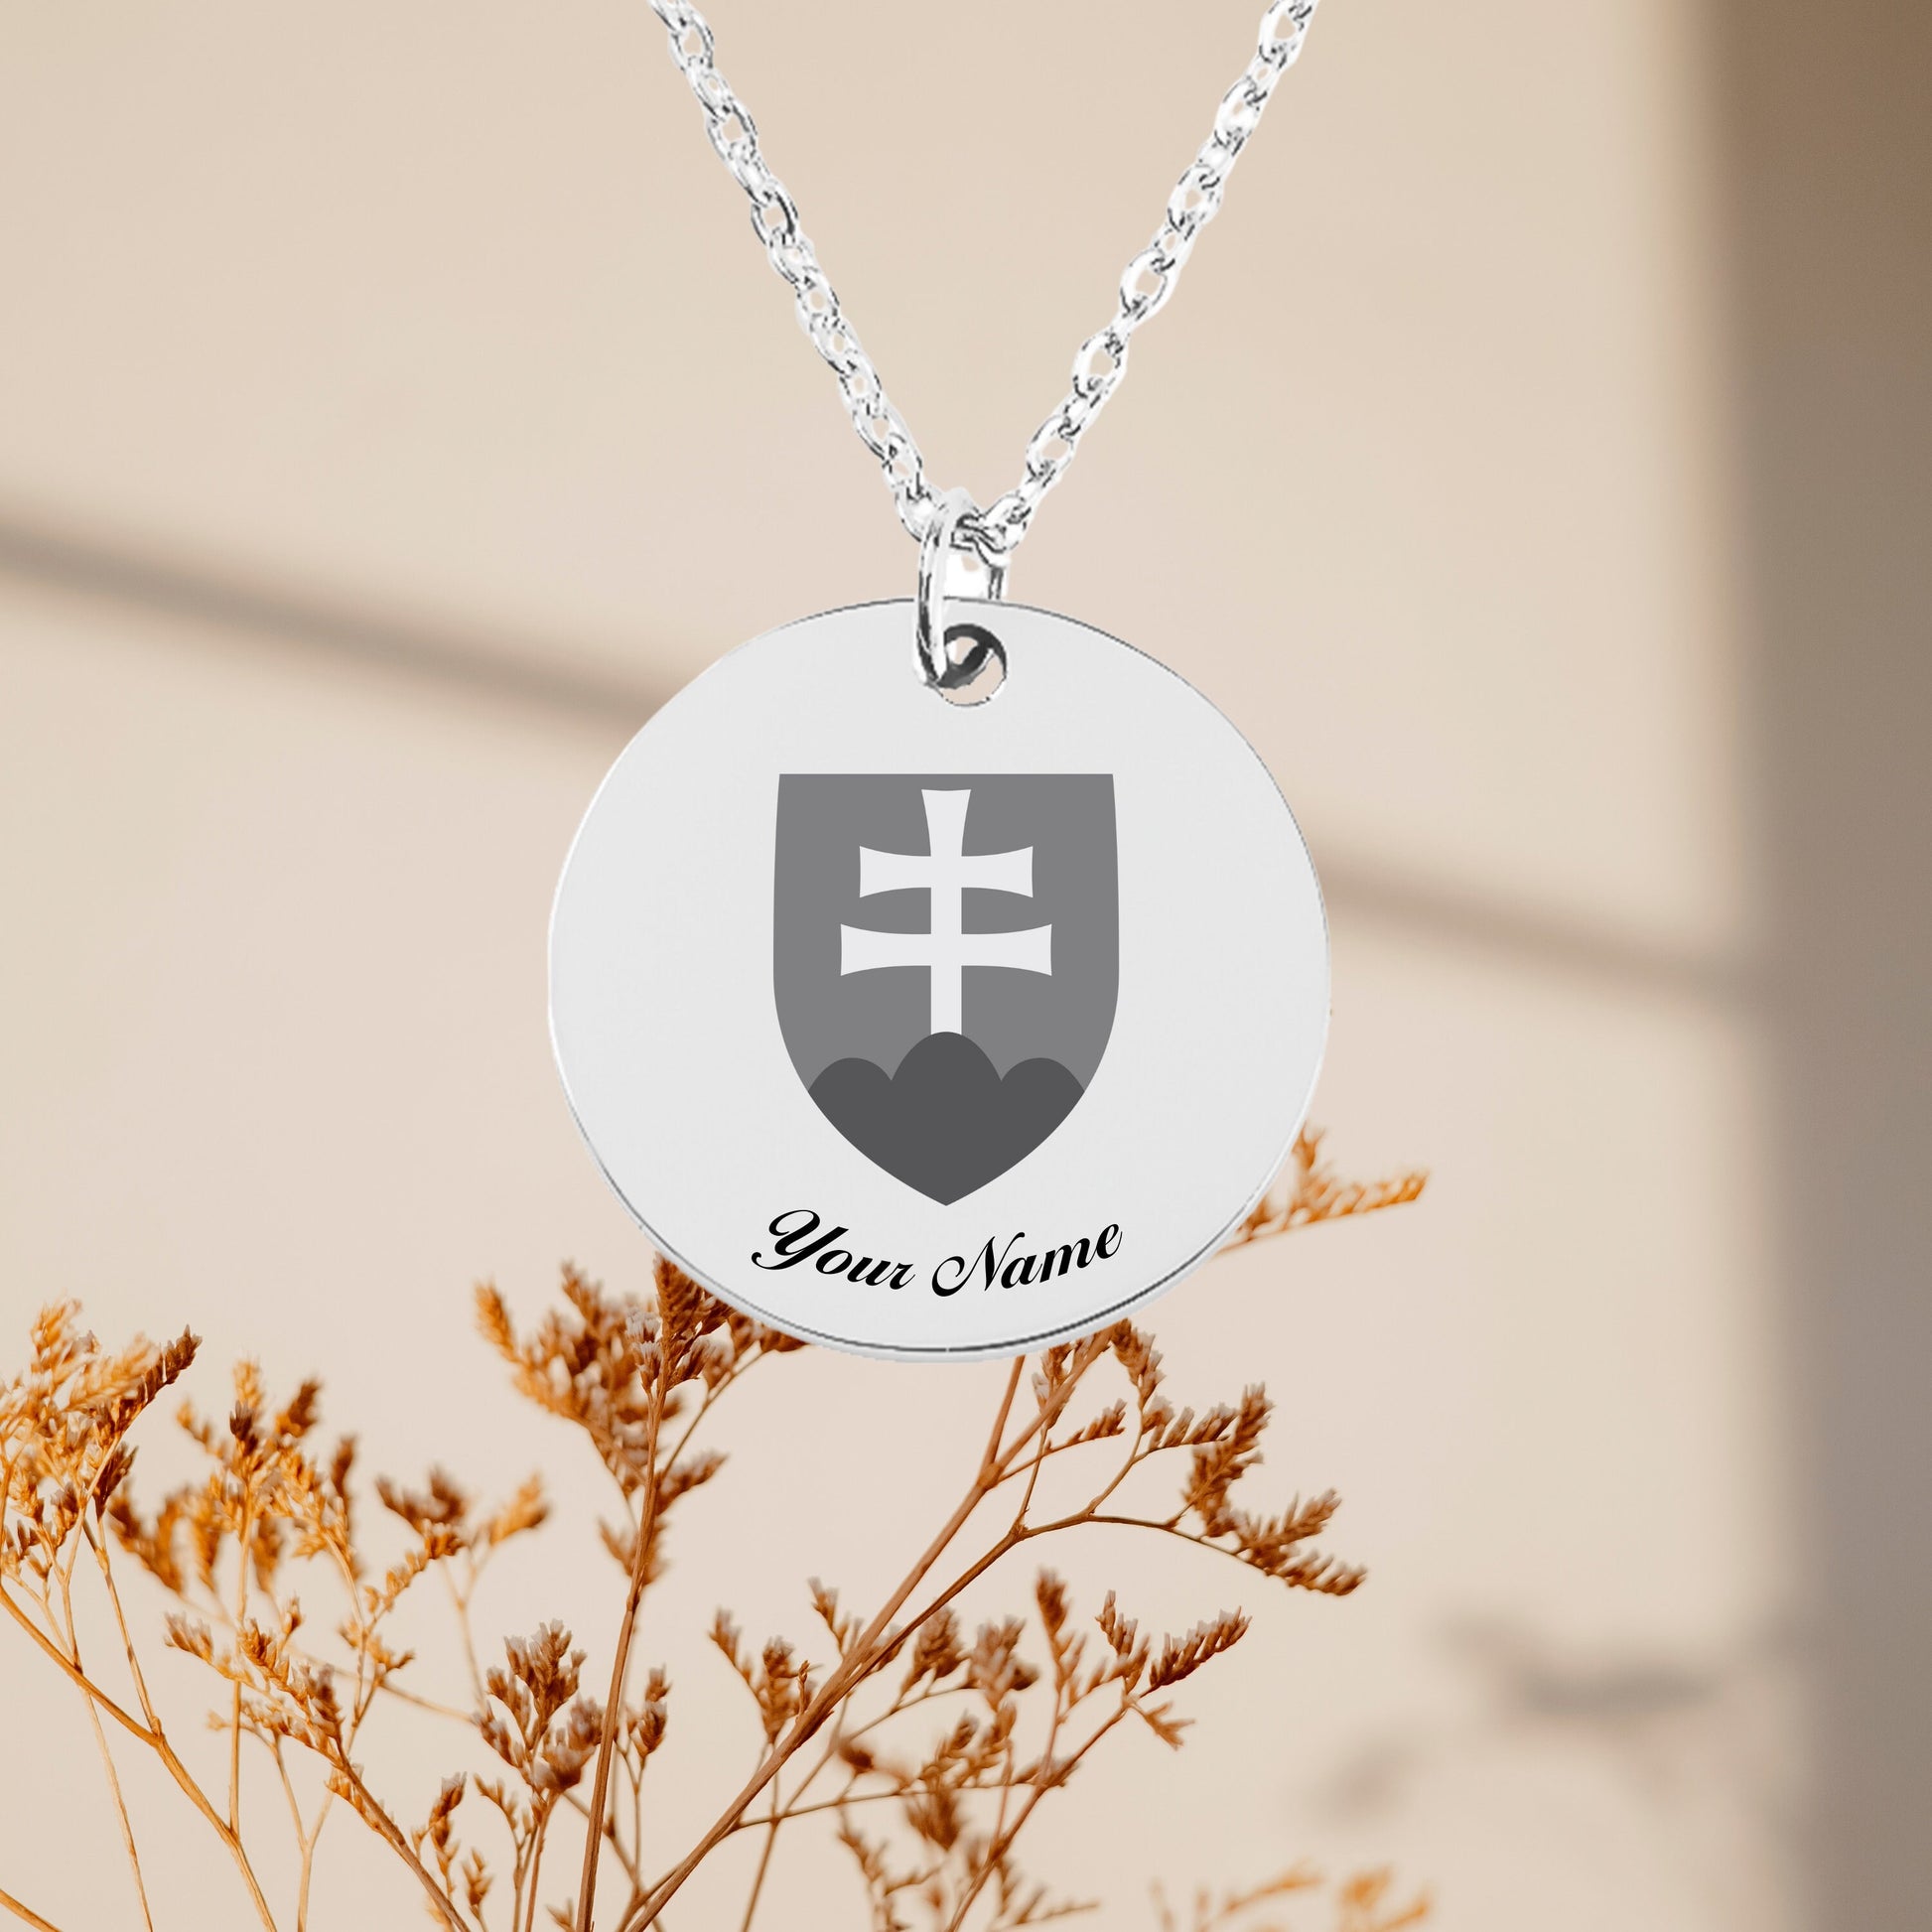 Slovakia National Emblem Necklace - Personalizable Jewelry